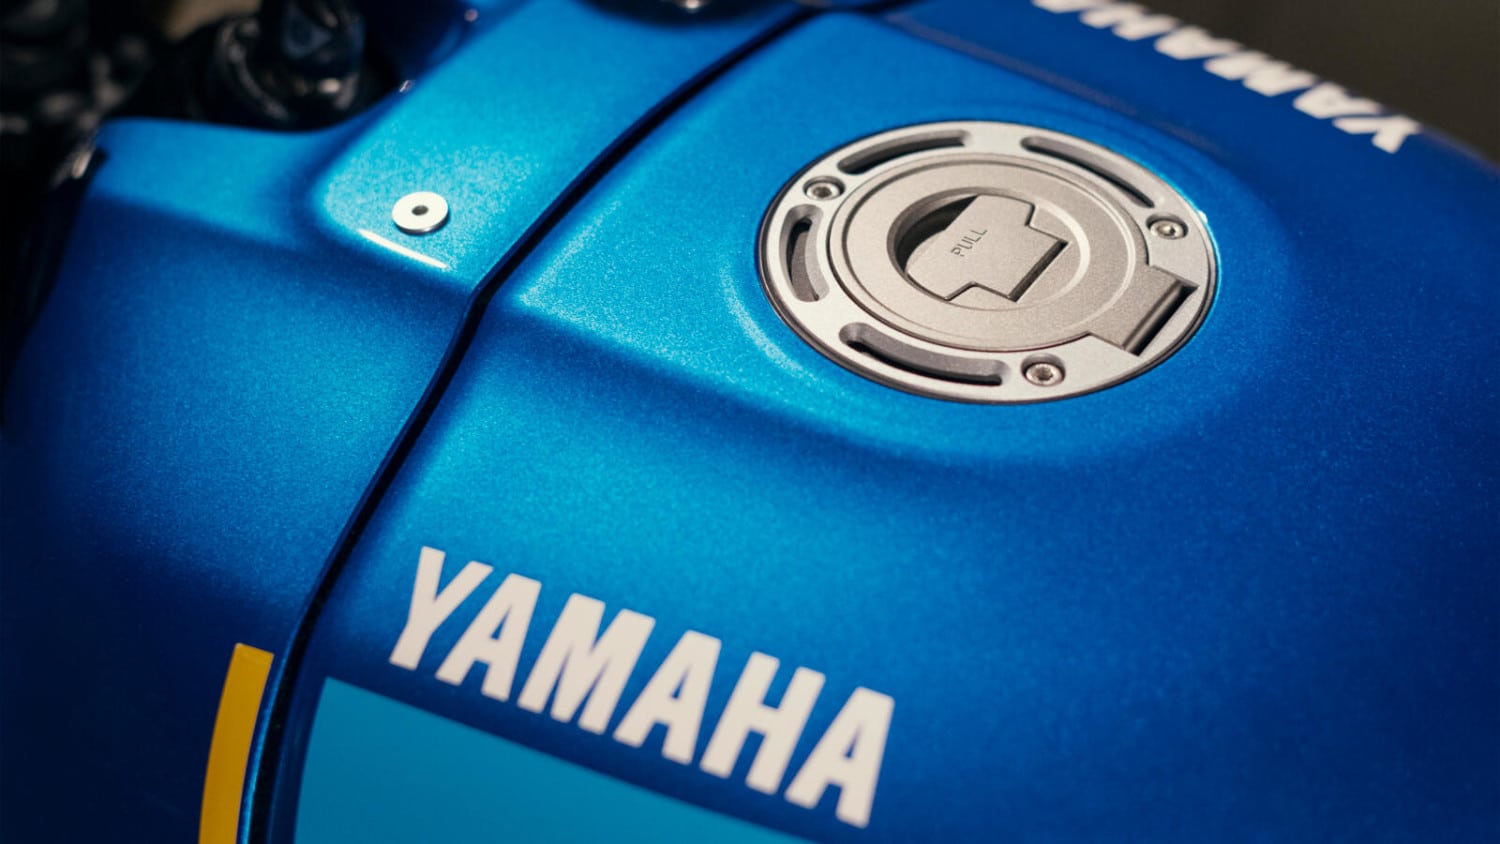 Yamaha’s genfødte legende